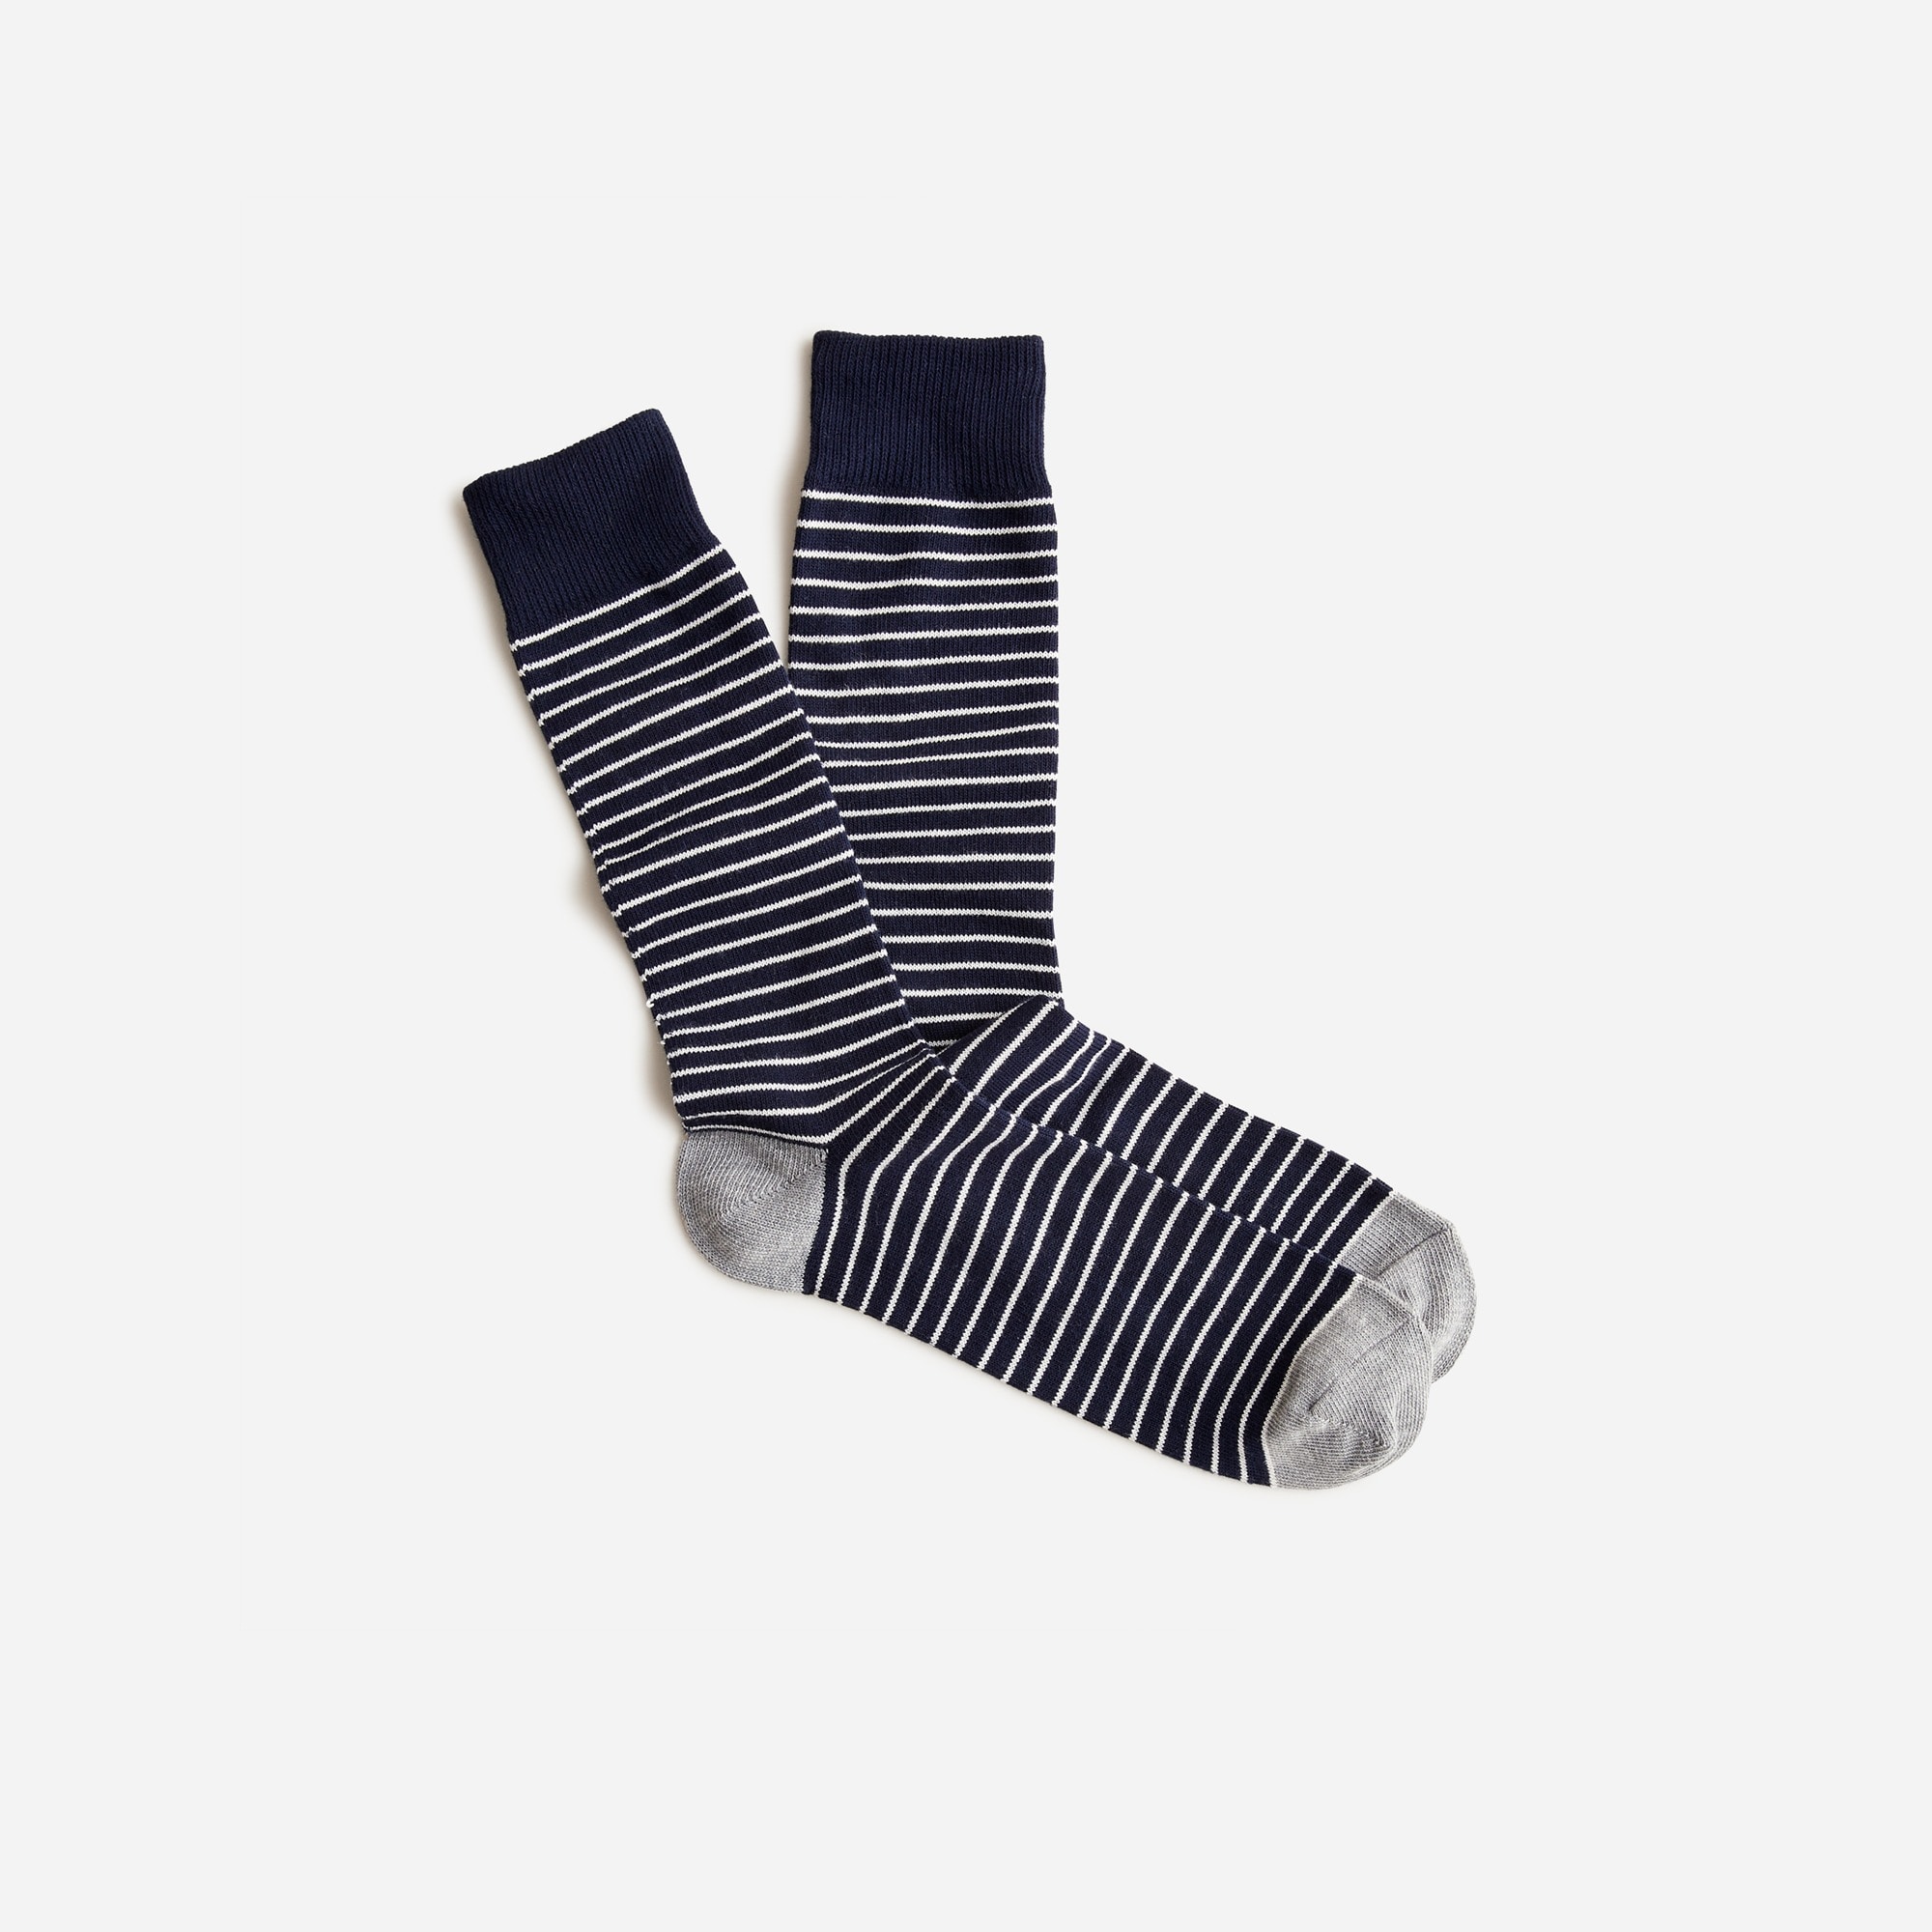 mens Tipped microstriped socks